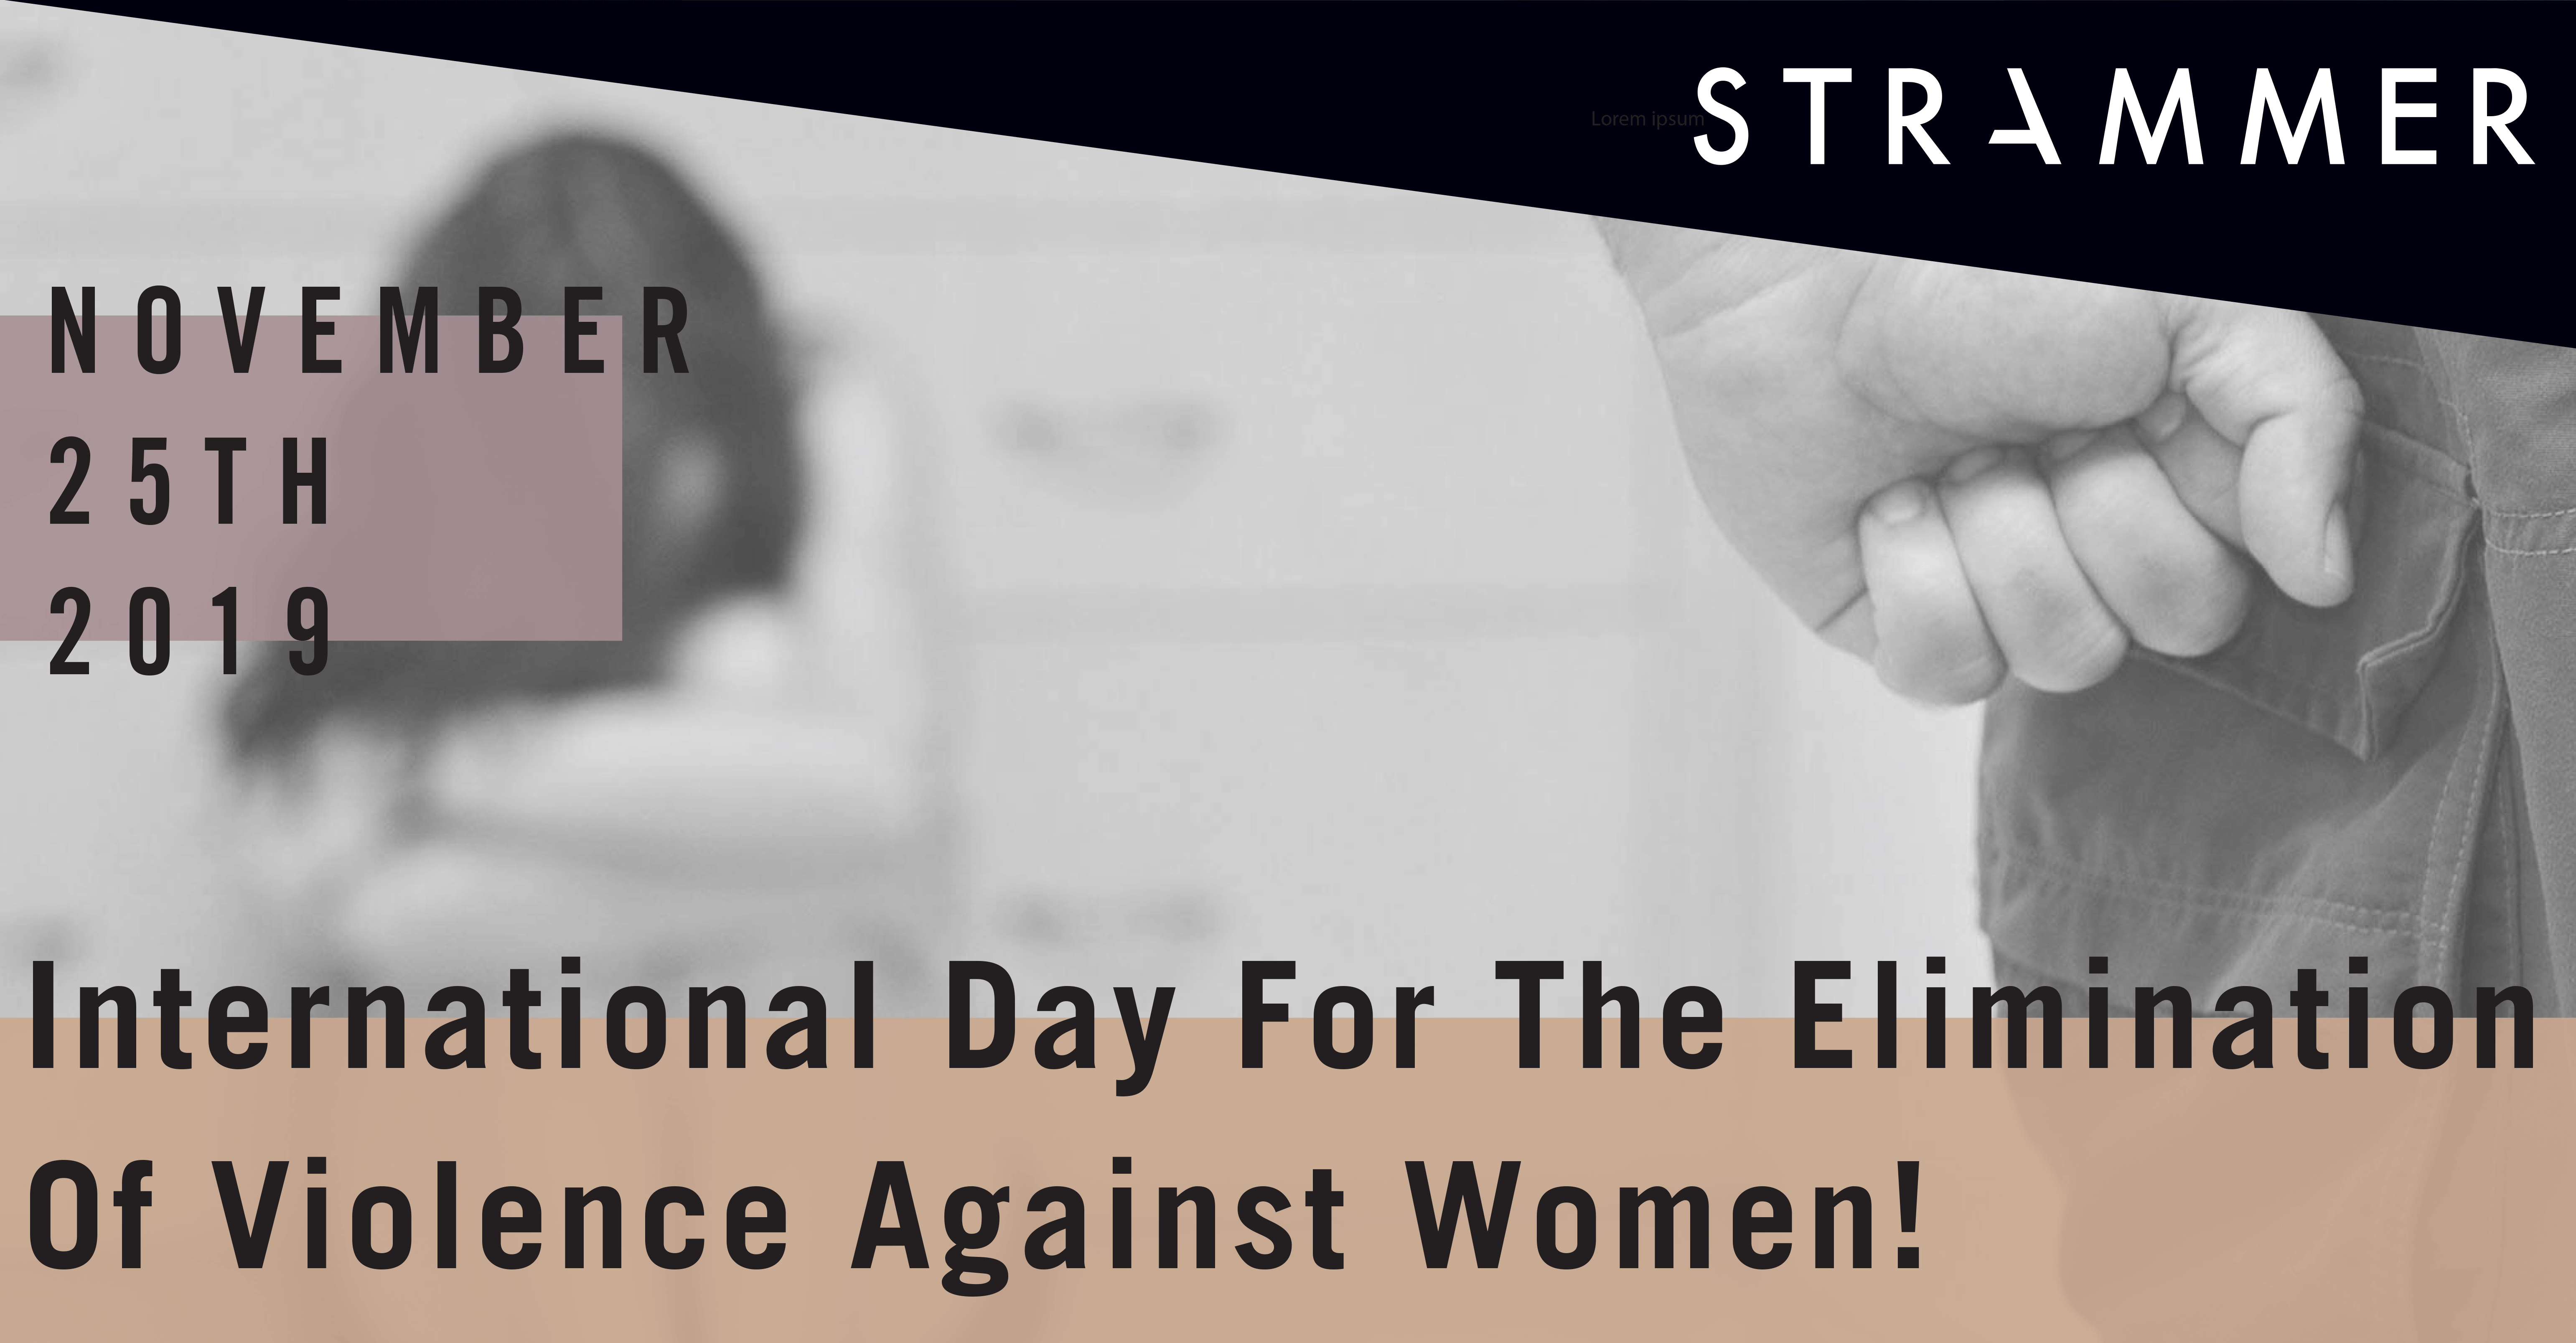 End Violence Against Women: November 25th 2019